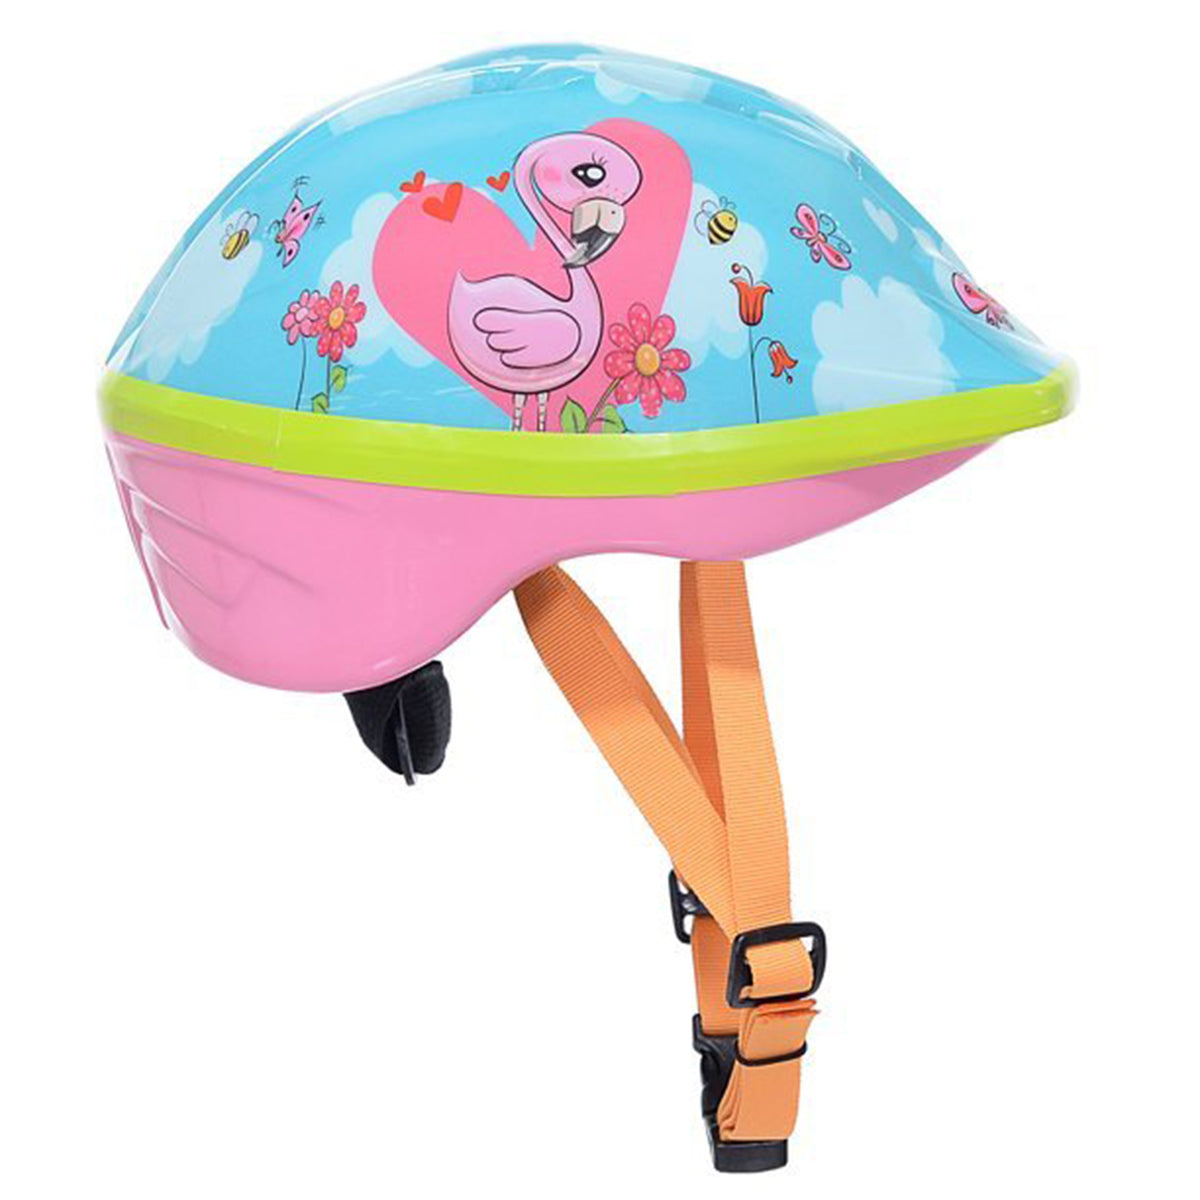 Kent Flamingo Pig Toddler Helmet & Pad Combo | Helmet & Pads for Kids Ages 1-3